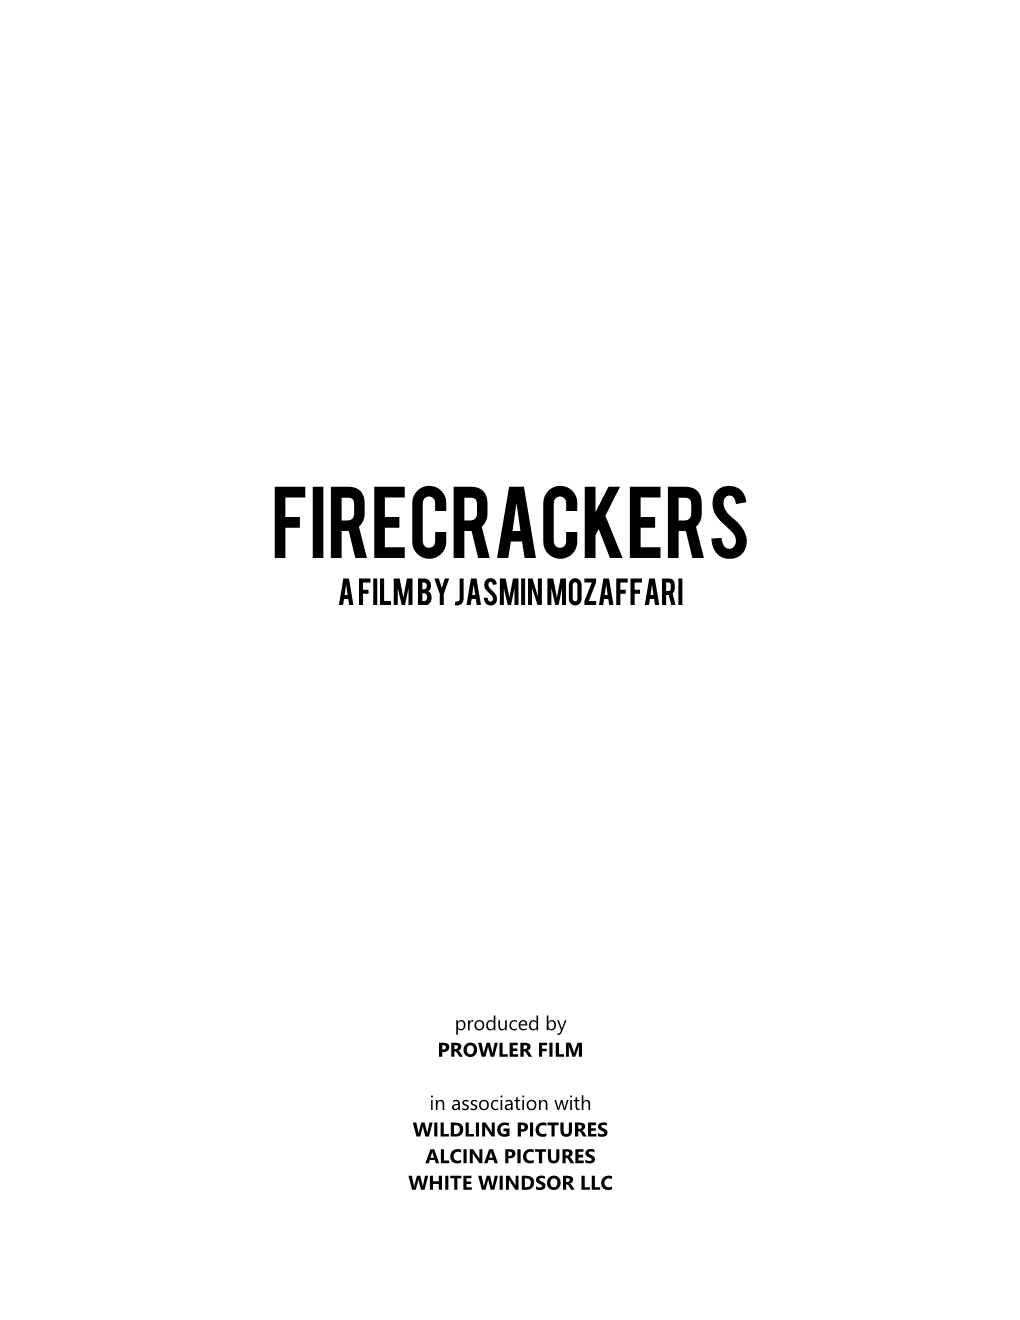 FIRECRACKERS a Film by Jasmin Mozaffari